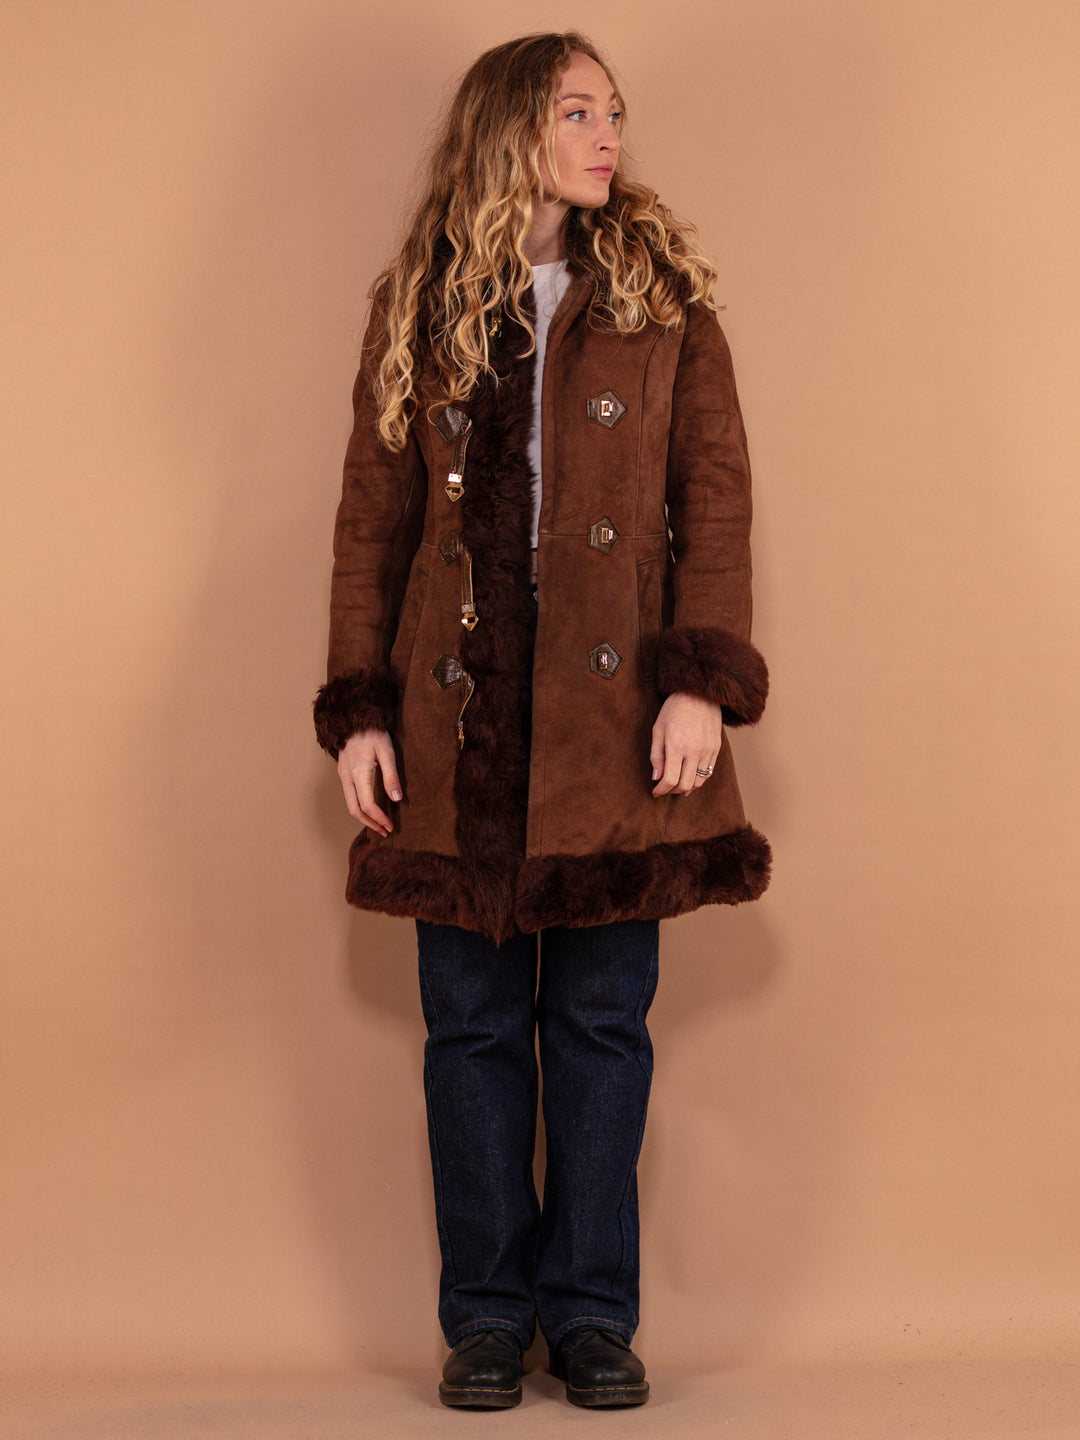 Penny Lane Coat 70's, Size XS Vintage Brown Sheepskin Coat, Sheepskin Suede Coat, Boho Western Hippie Fashion Style Coat, Retro Fur Coat